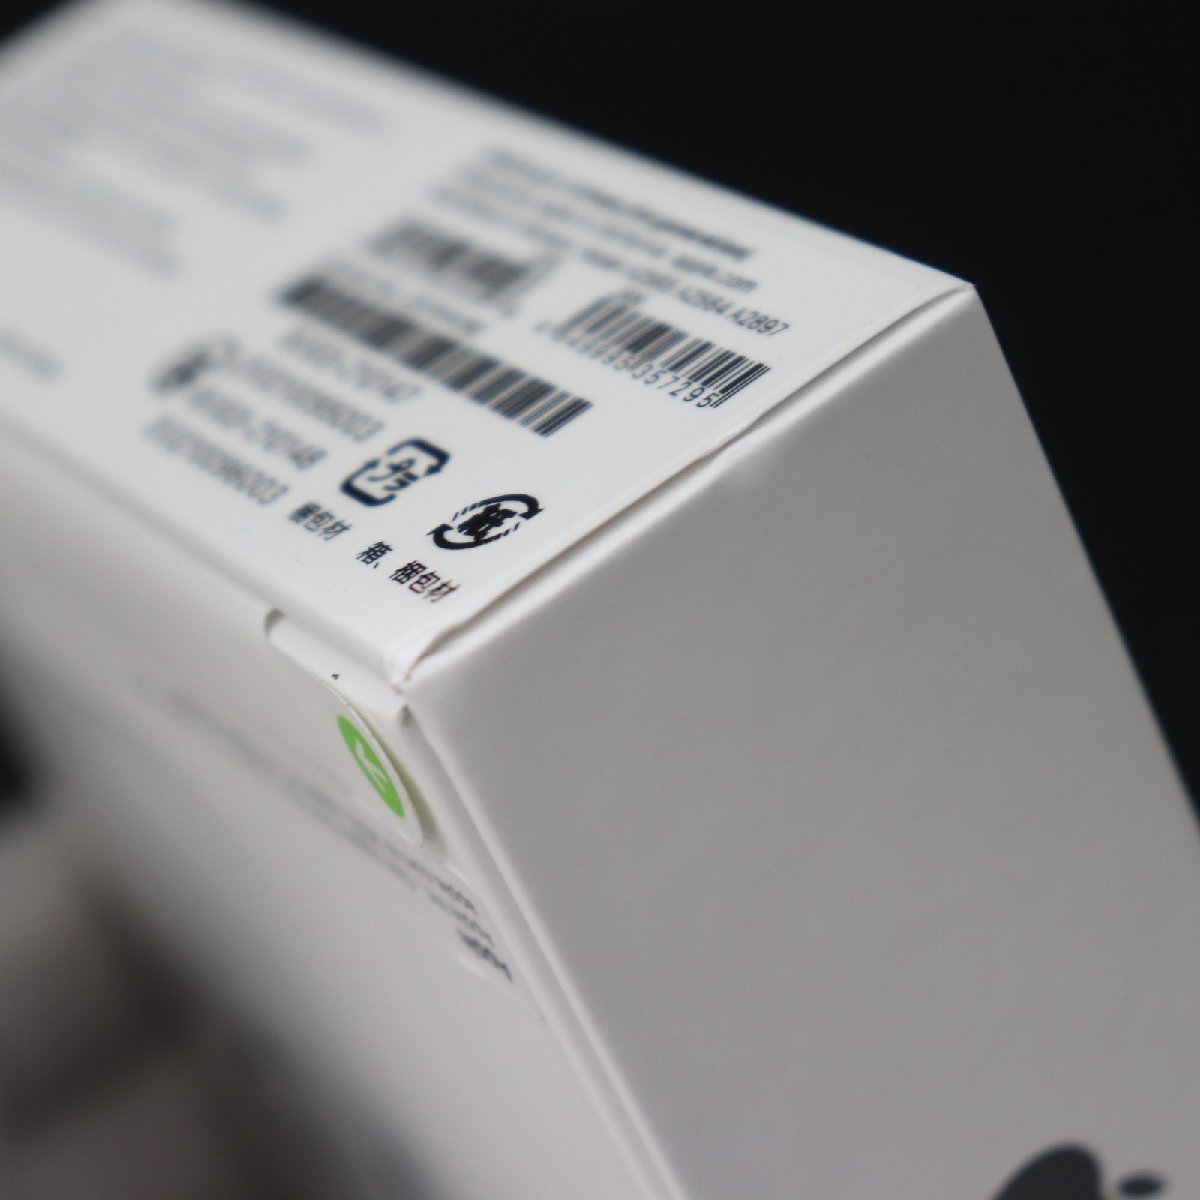 ITJBRTSIHM9S 即決 本物 新品 未開封 Apple アップル AirPods 第3世代 MPNY3J/A ワイヤレス イヤホン Lightning 充電ケース付き ホワイト_画像5